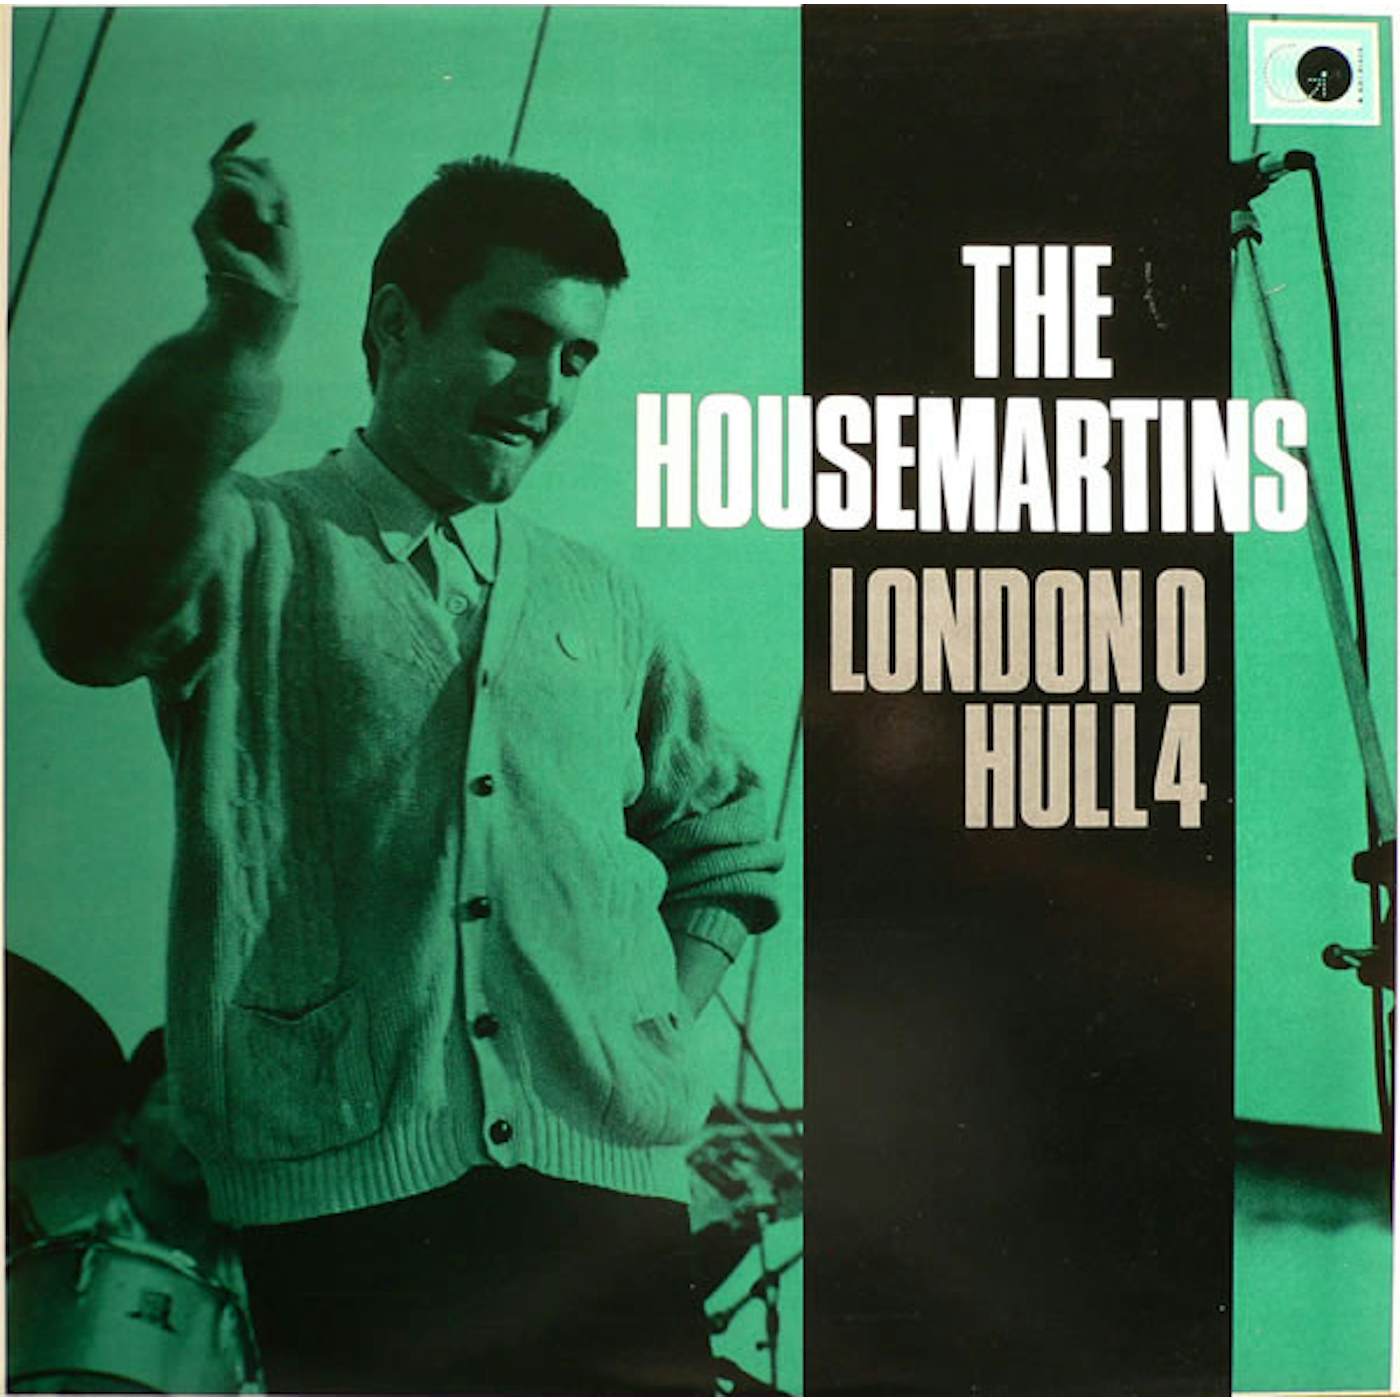 The Housemartins London 0 Hull 4 Vinyl Record